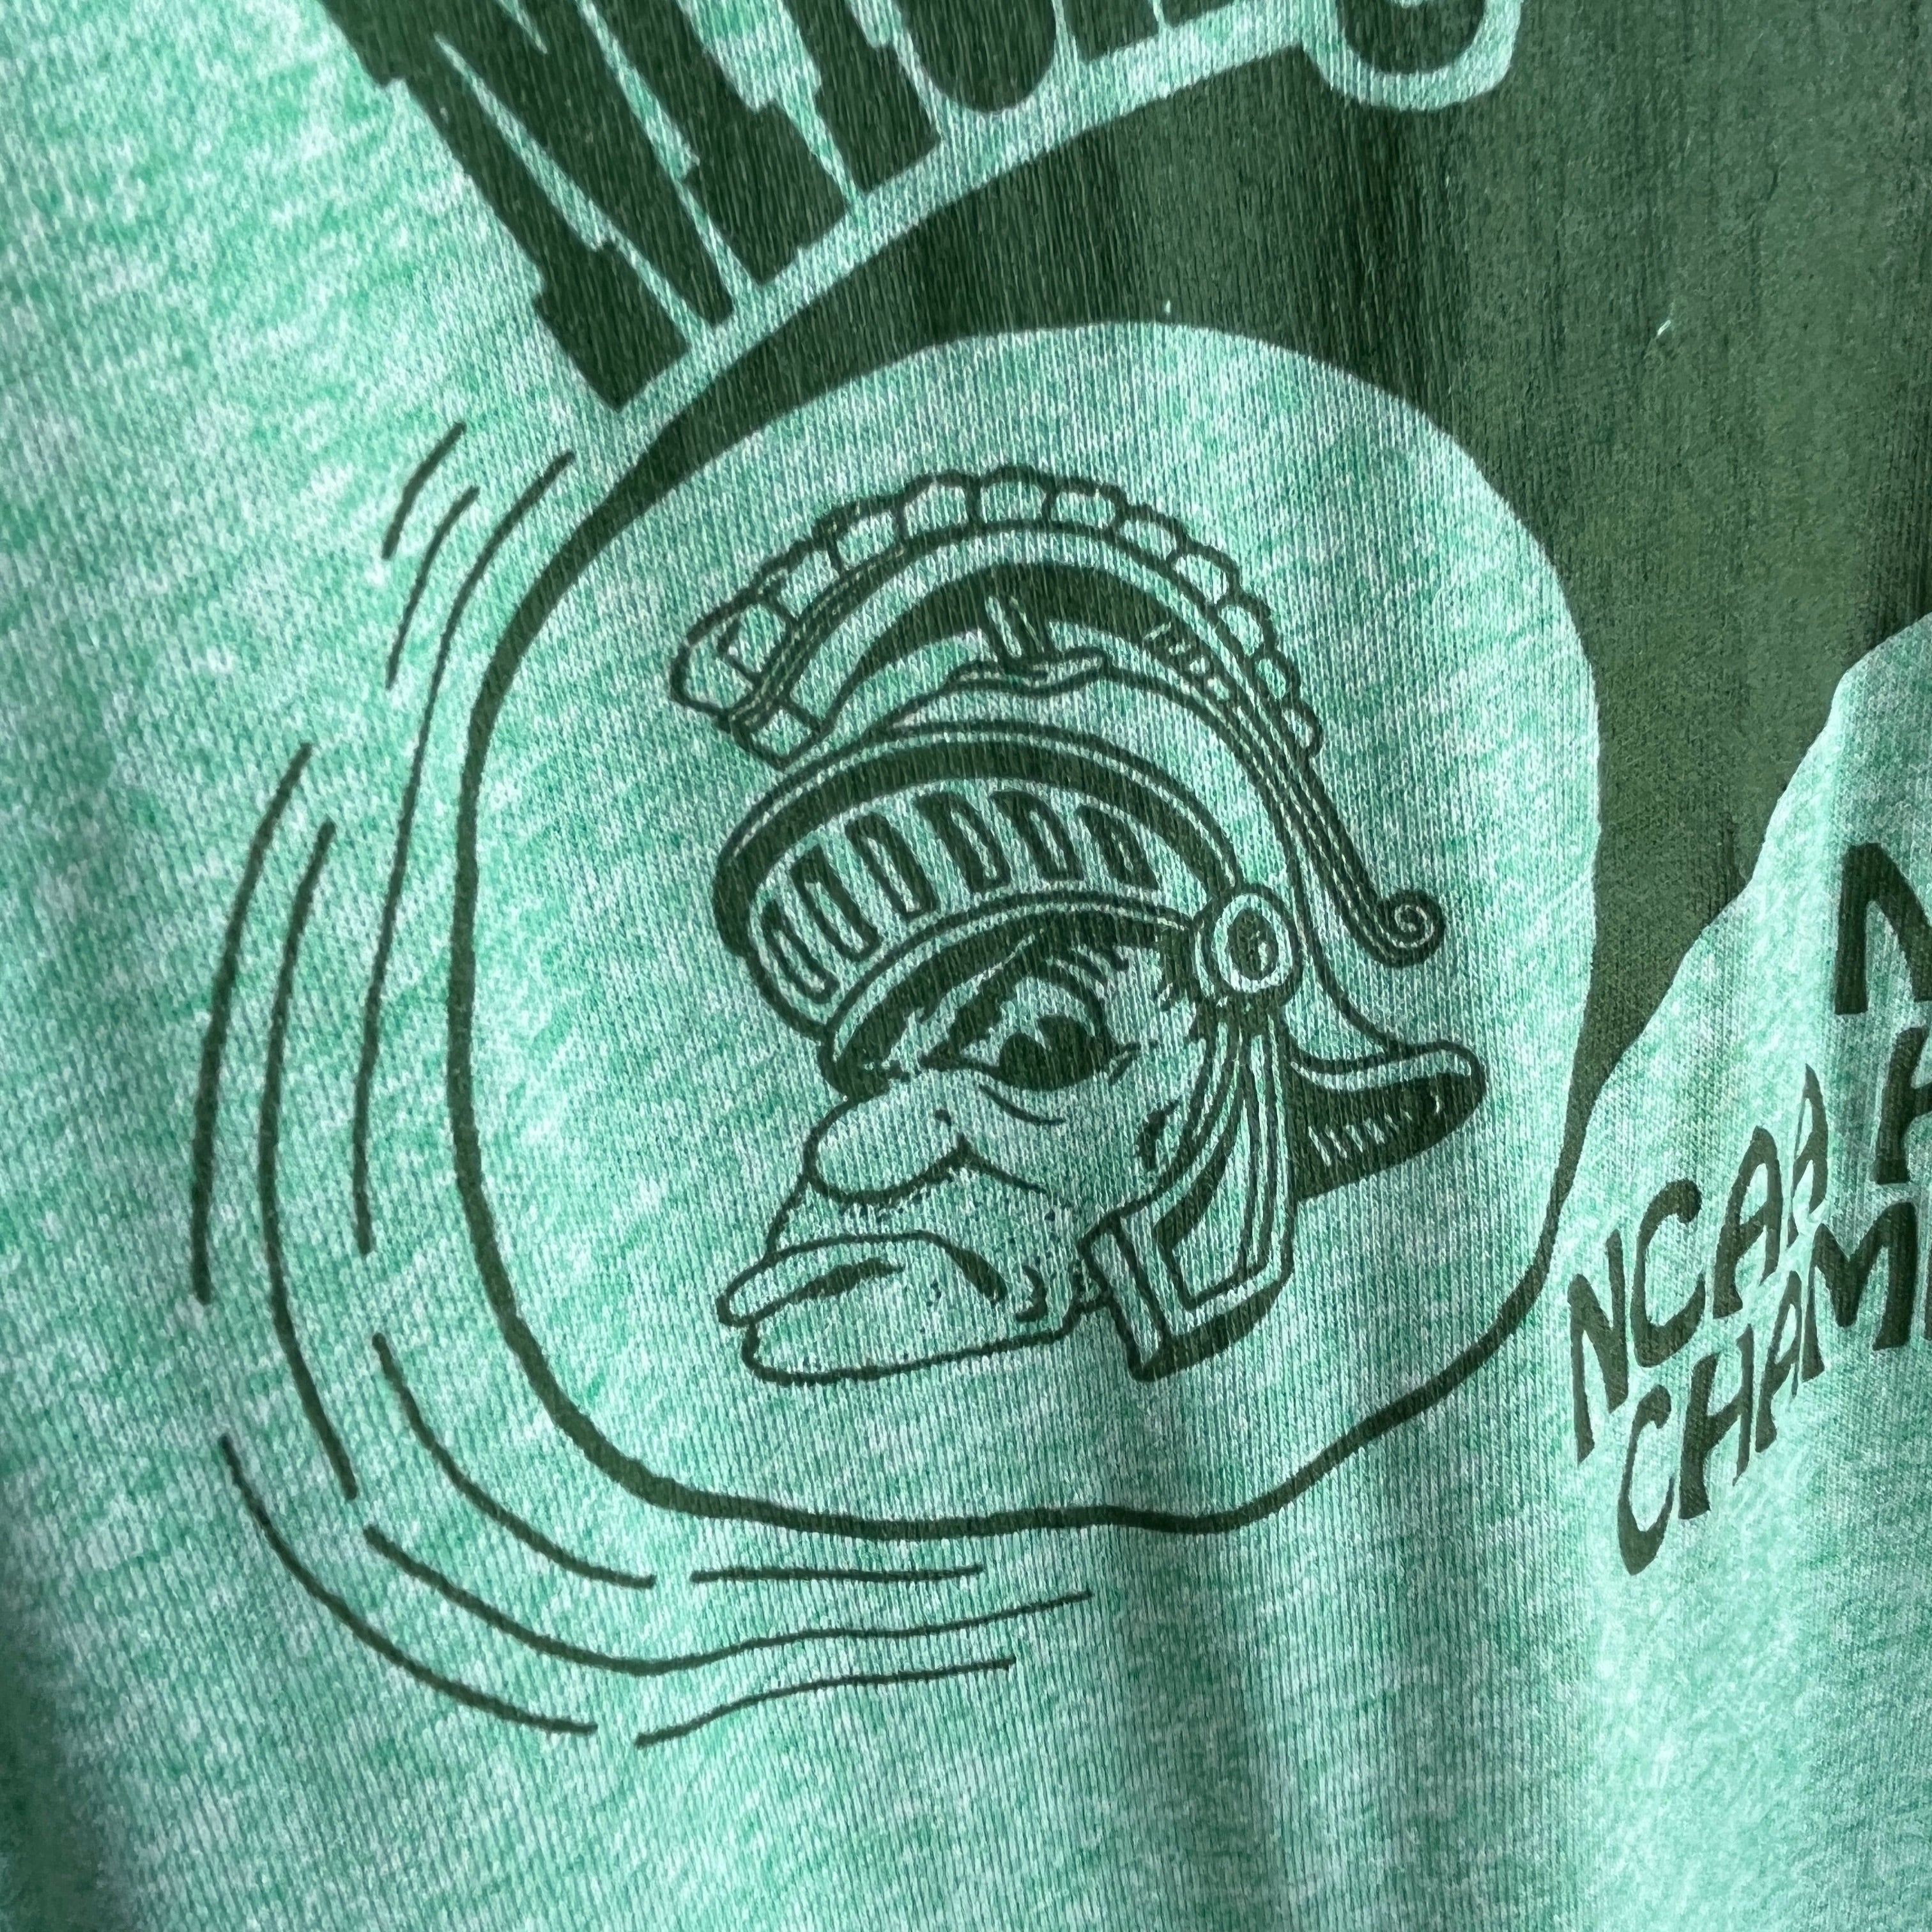 1986 Michigan State National NCAA Hockey Champions Ring T-Shirt